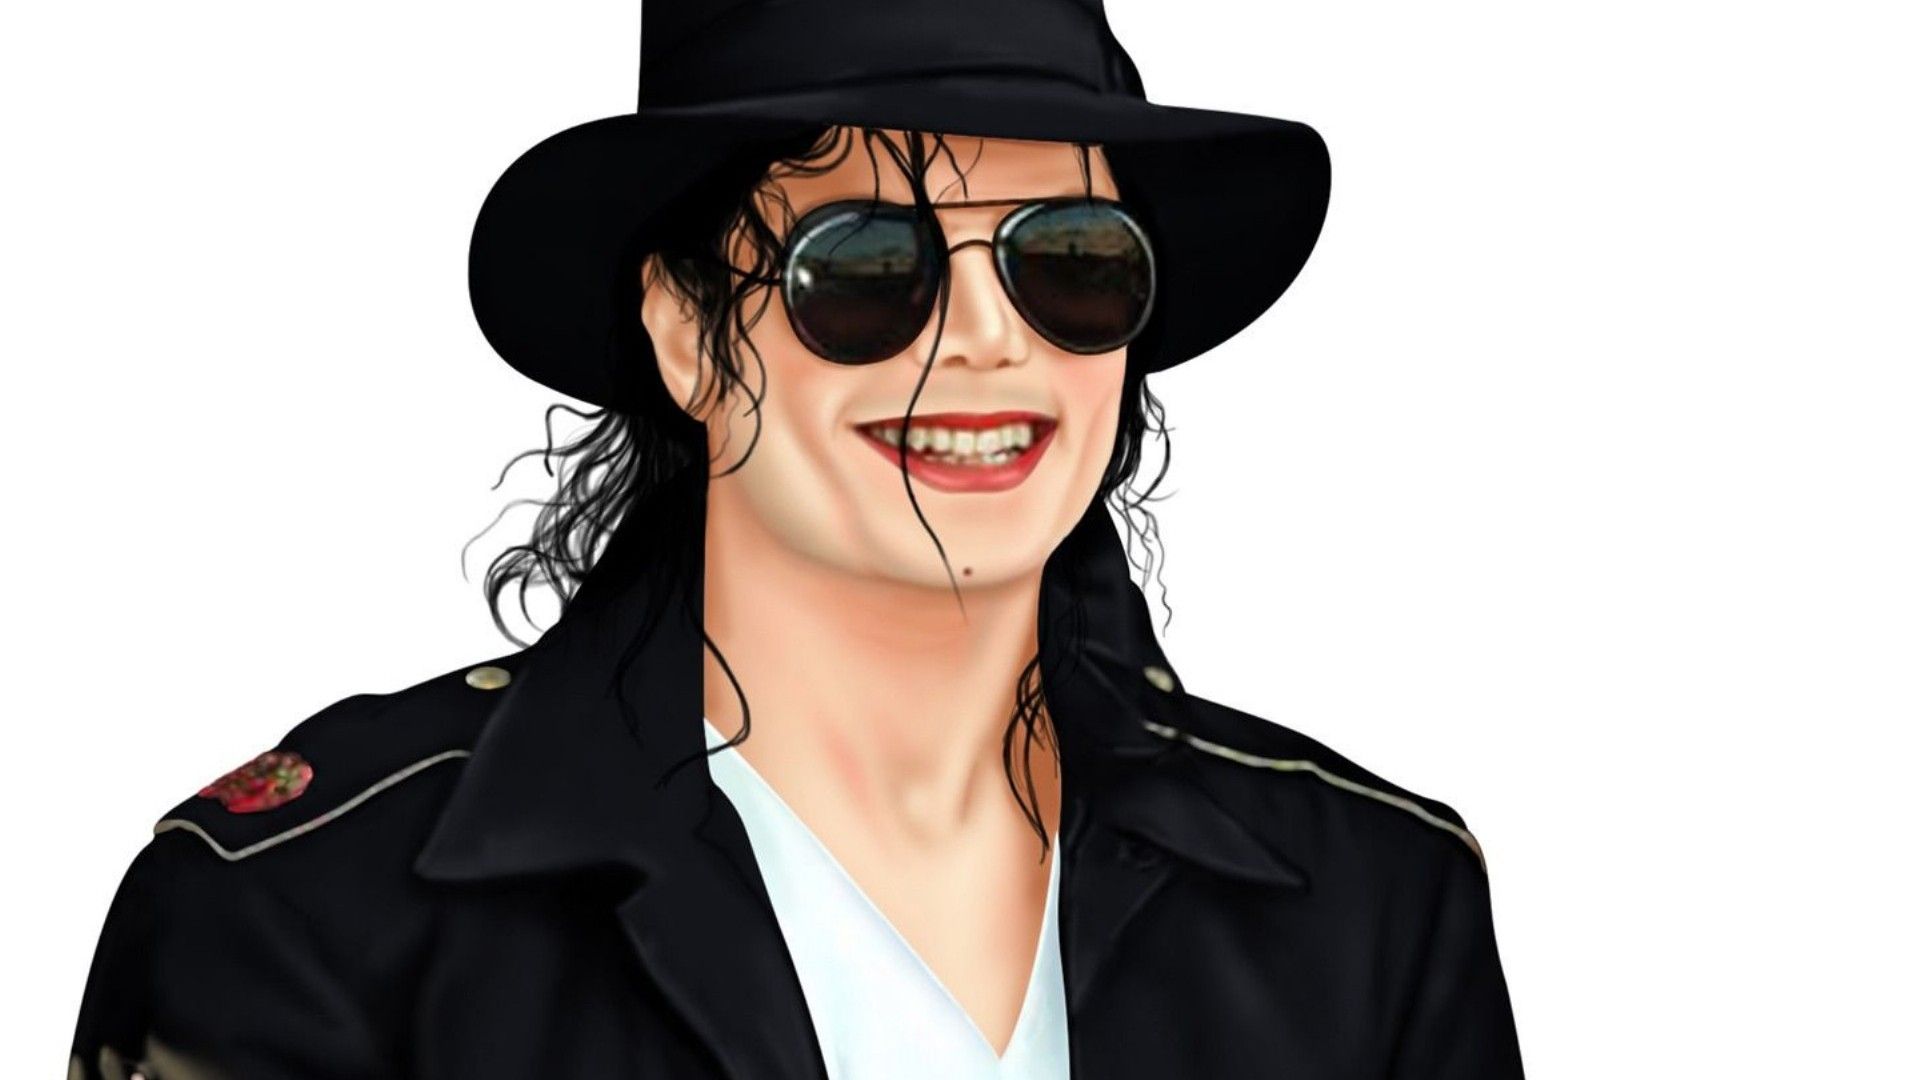 Michael-Jackson-Wallpaper-Photos.jpg